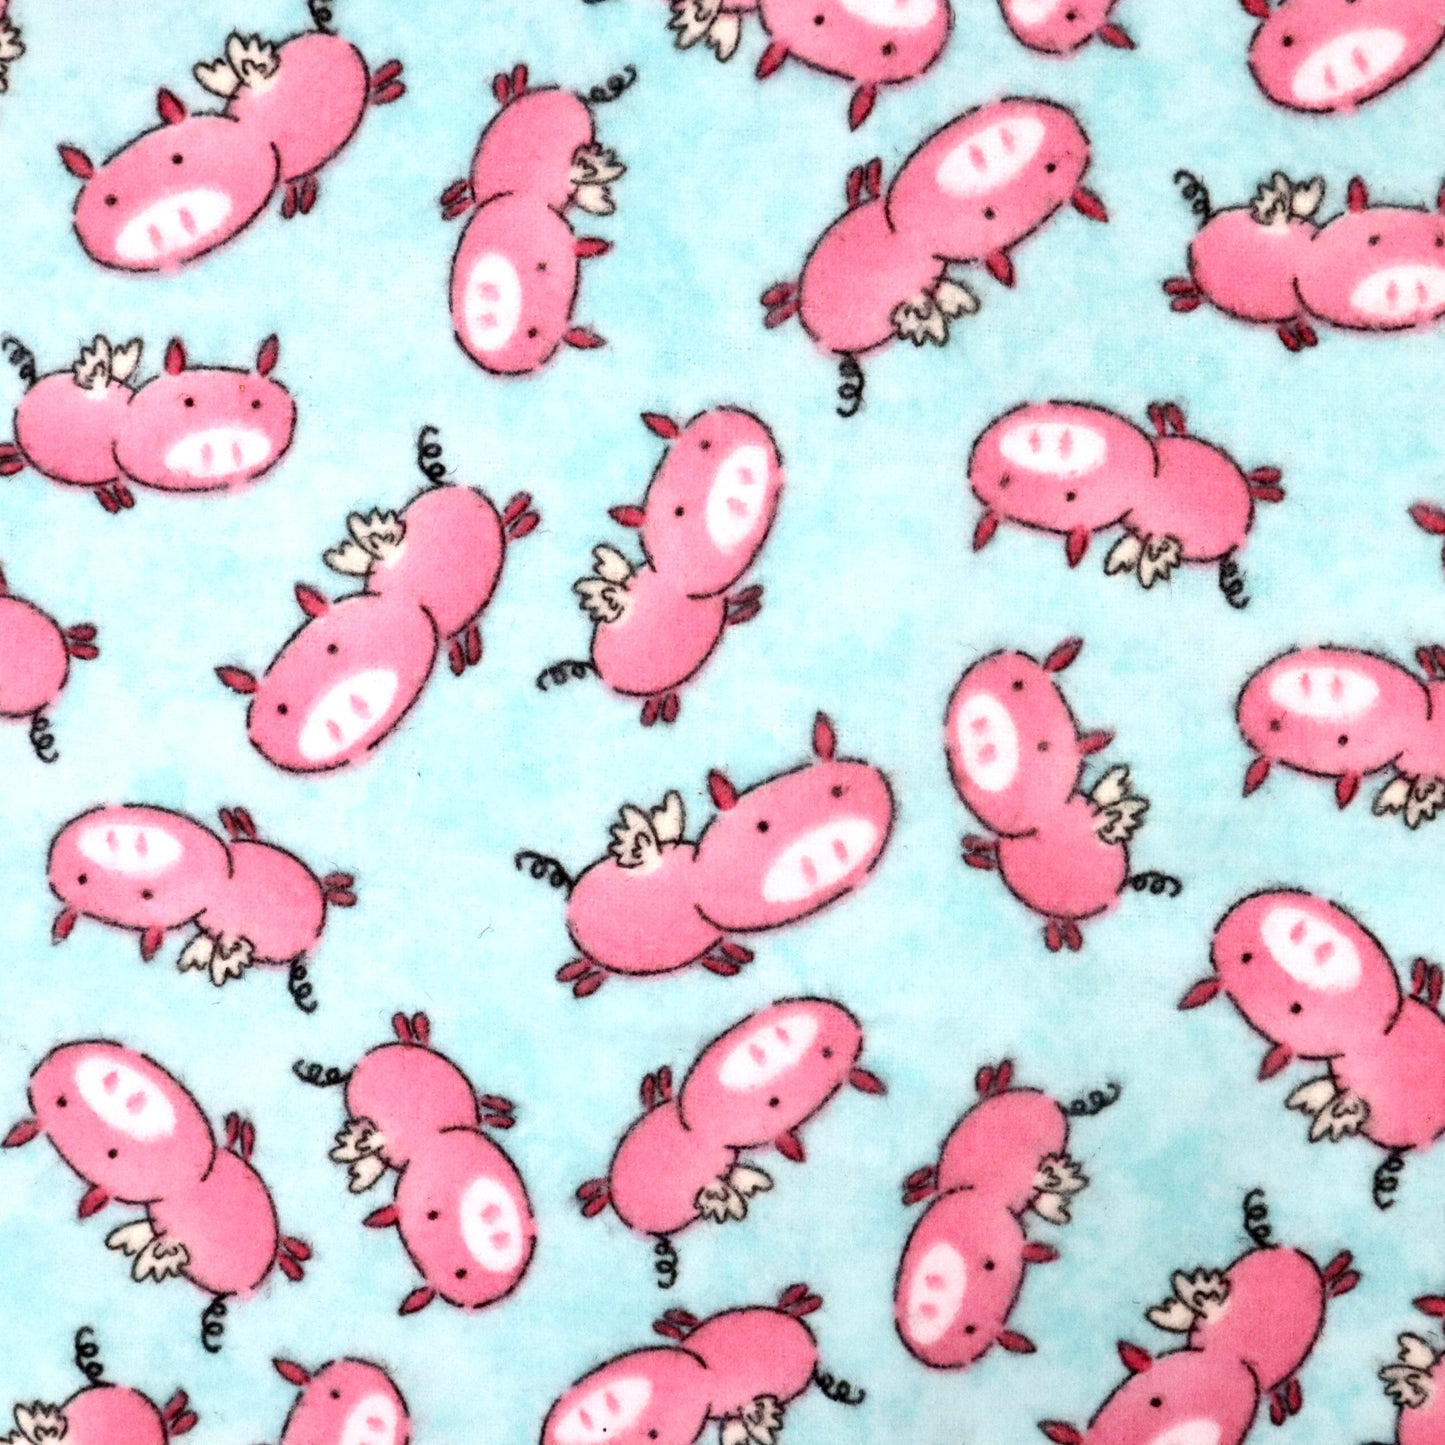 Flying Piggies - Cotton Flannel